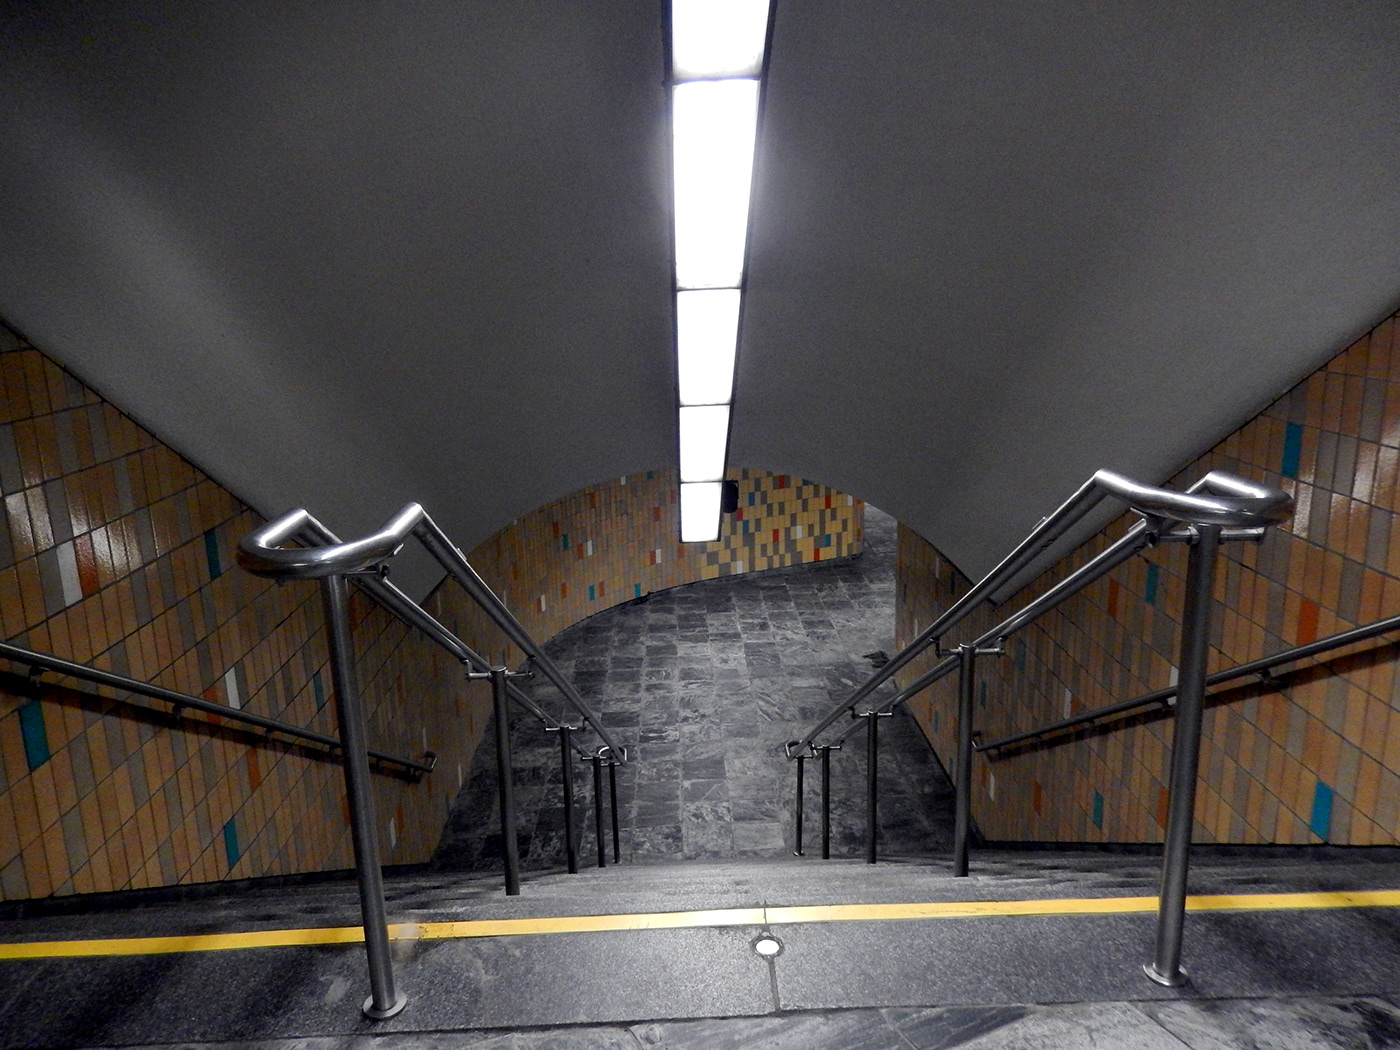 Architecture Photography Montreal subway station architecture subway underground metro